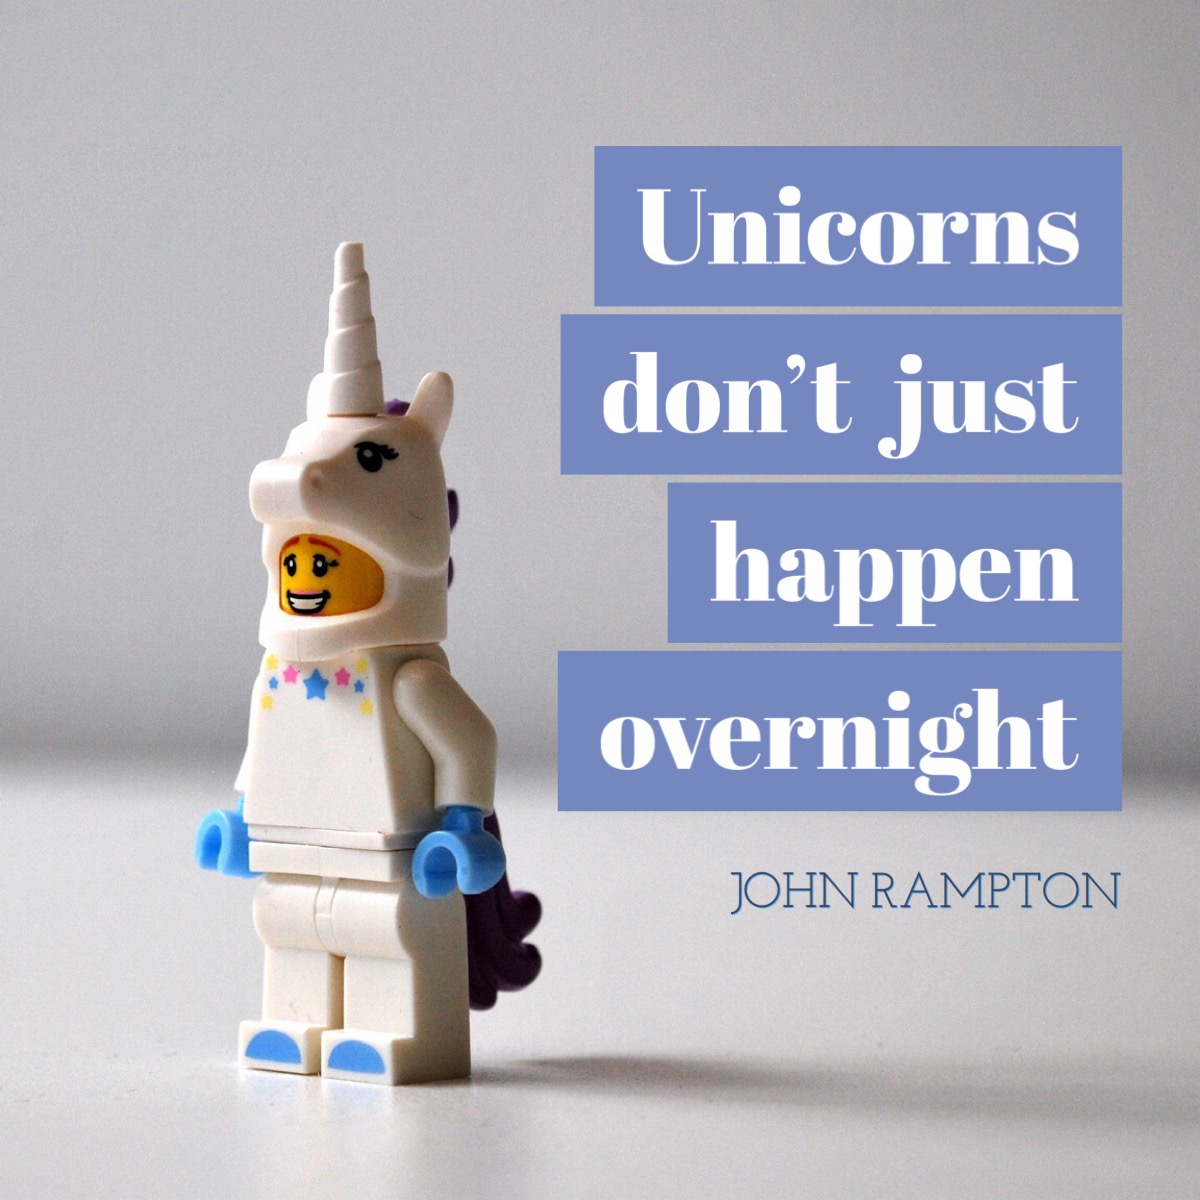 Unicorns don't just happen overnight